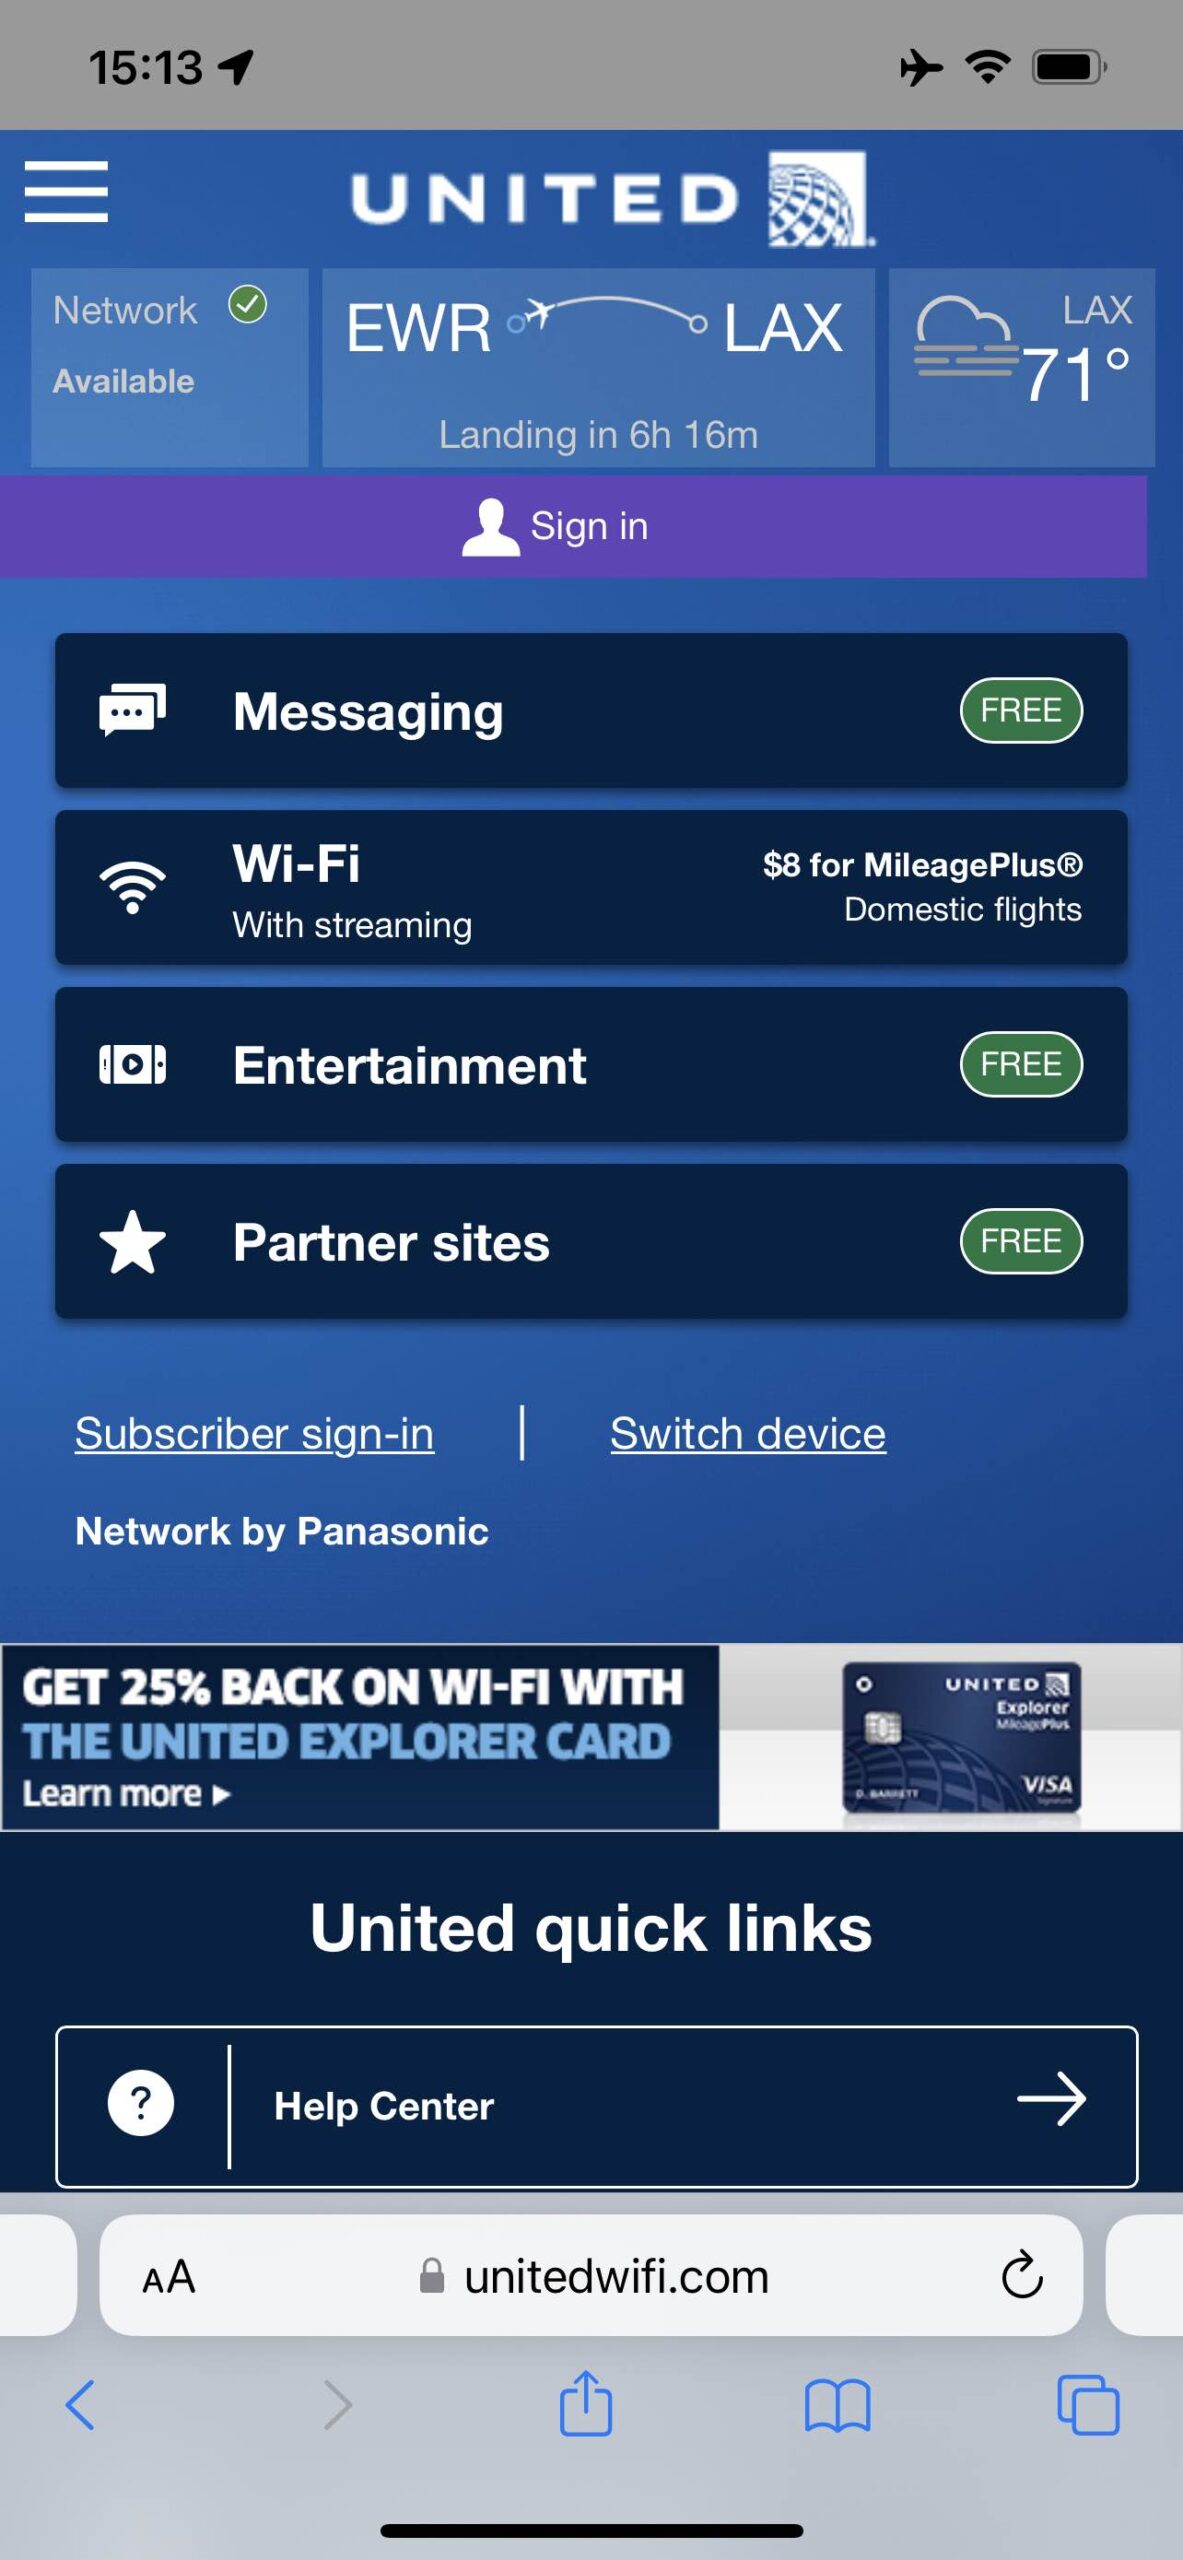 a screenshot of a phone